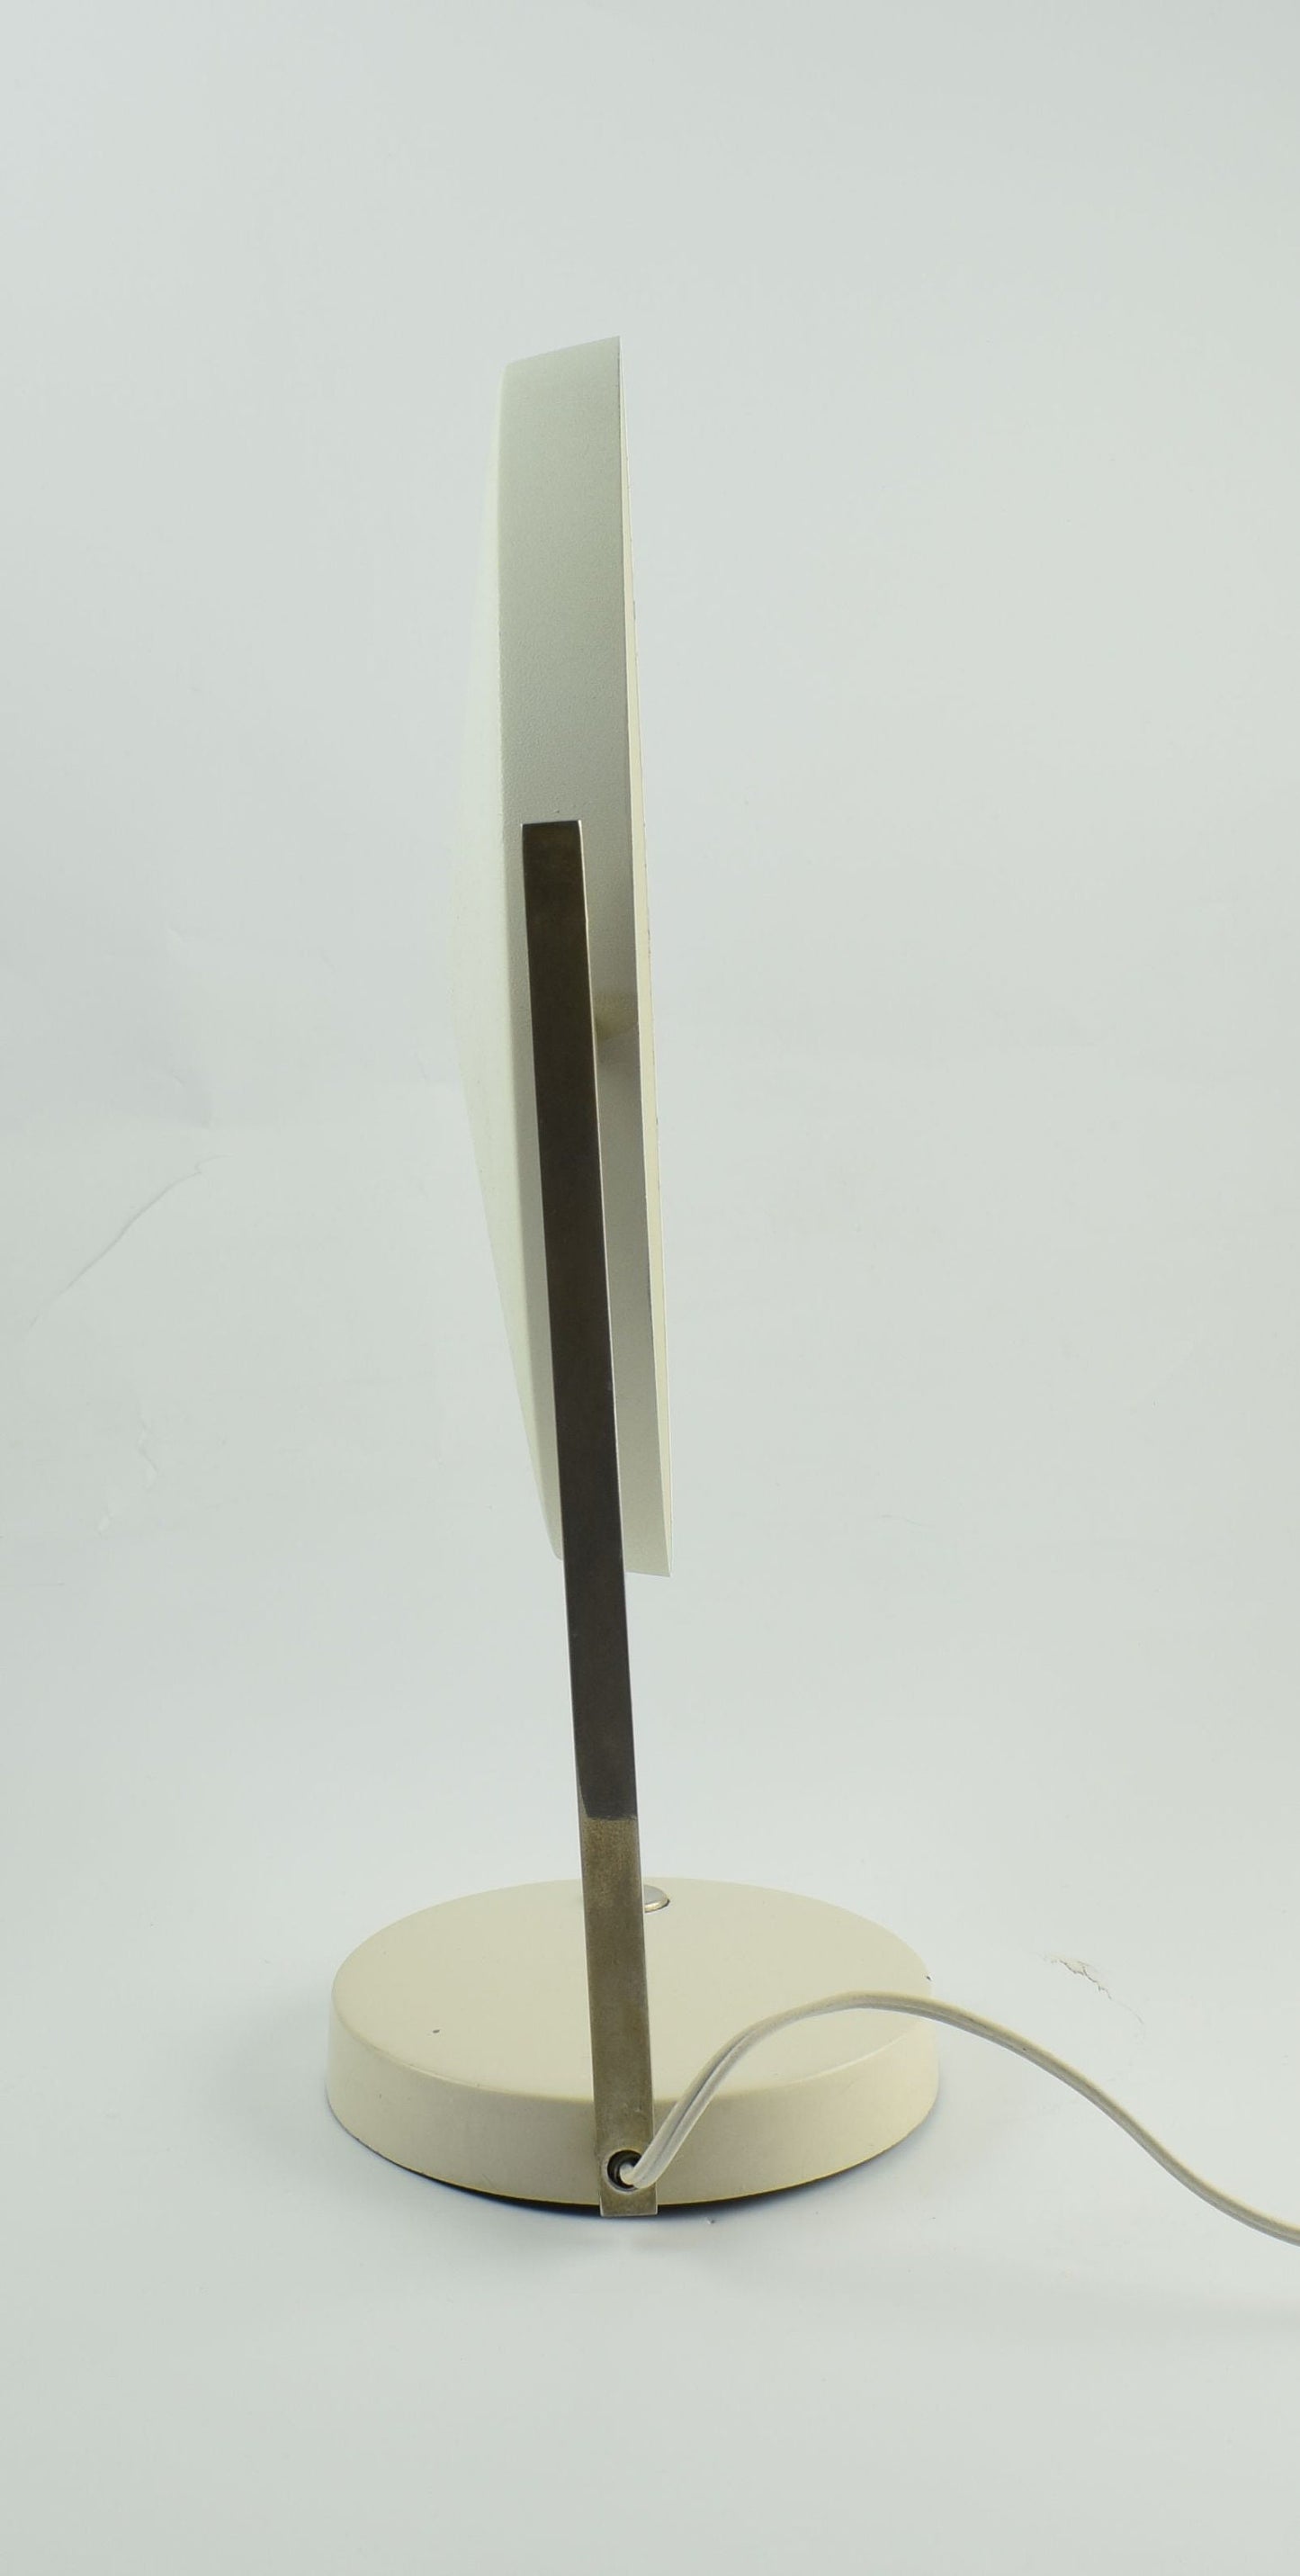 Hillebrand leuchten tafellamp Oslo, grijze bureaulamp ontworpen door Heinz Pfaender 1962.